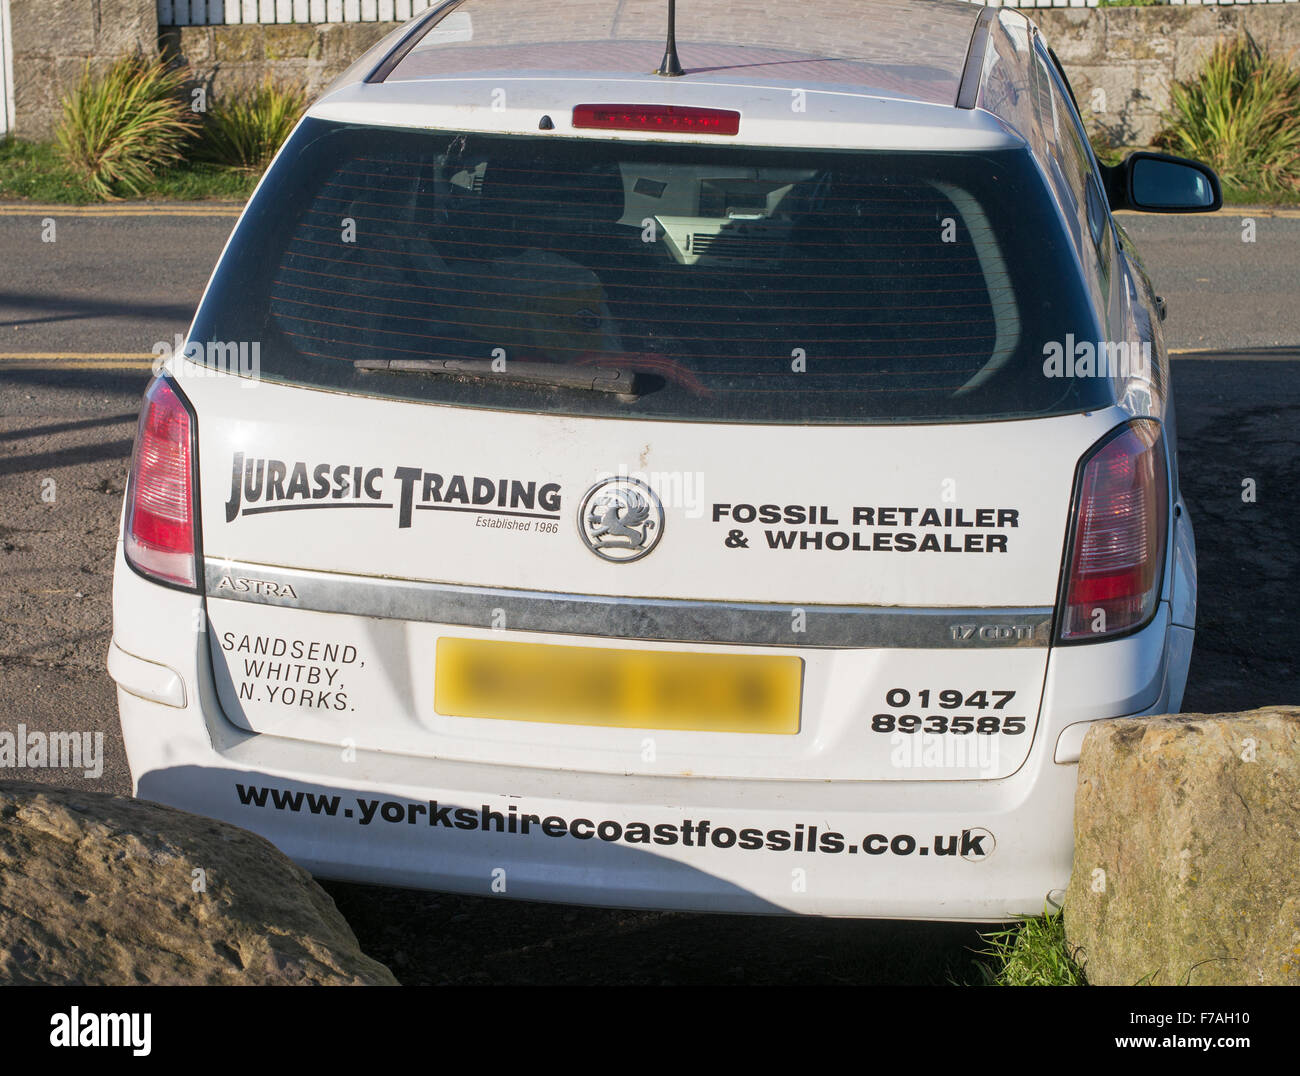 Jurassic Trading, car belonging to Fossil retailer, Port Mulgrave, North Yorkshire, England, UK Stock Photo